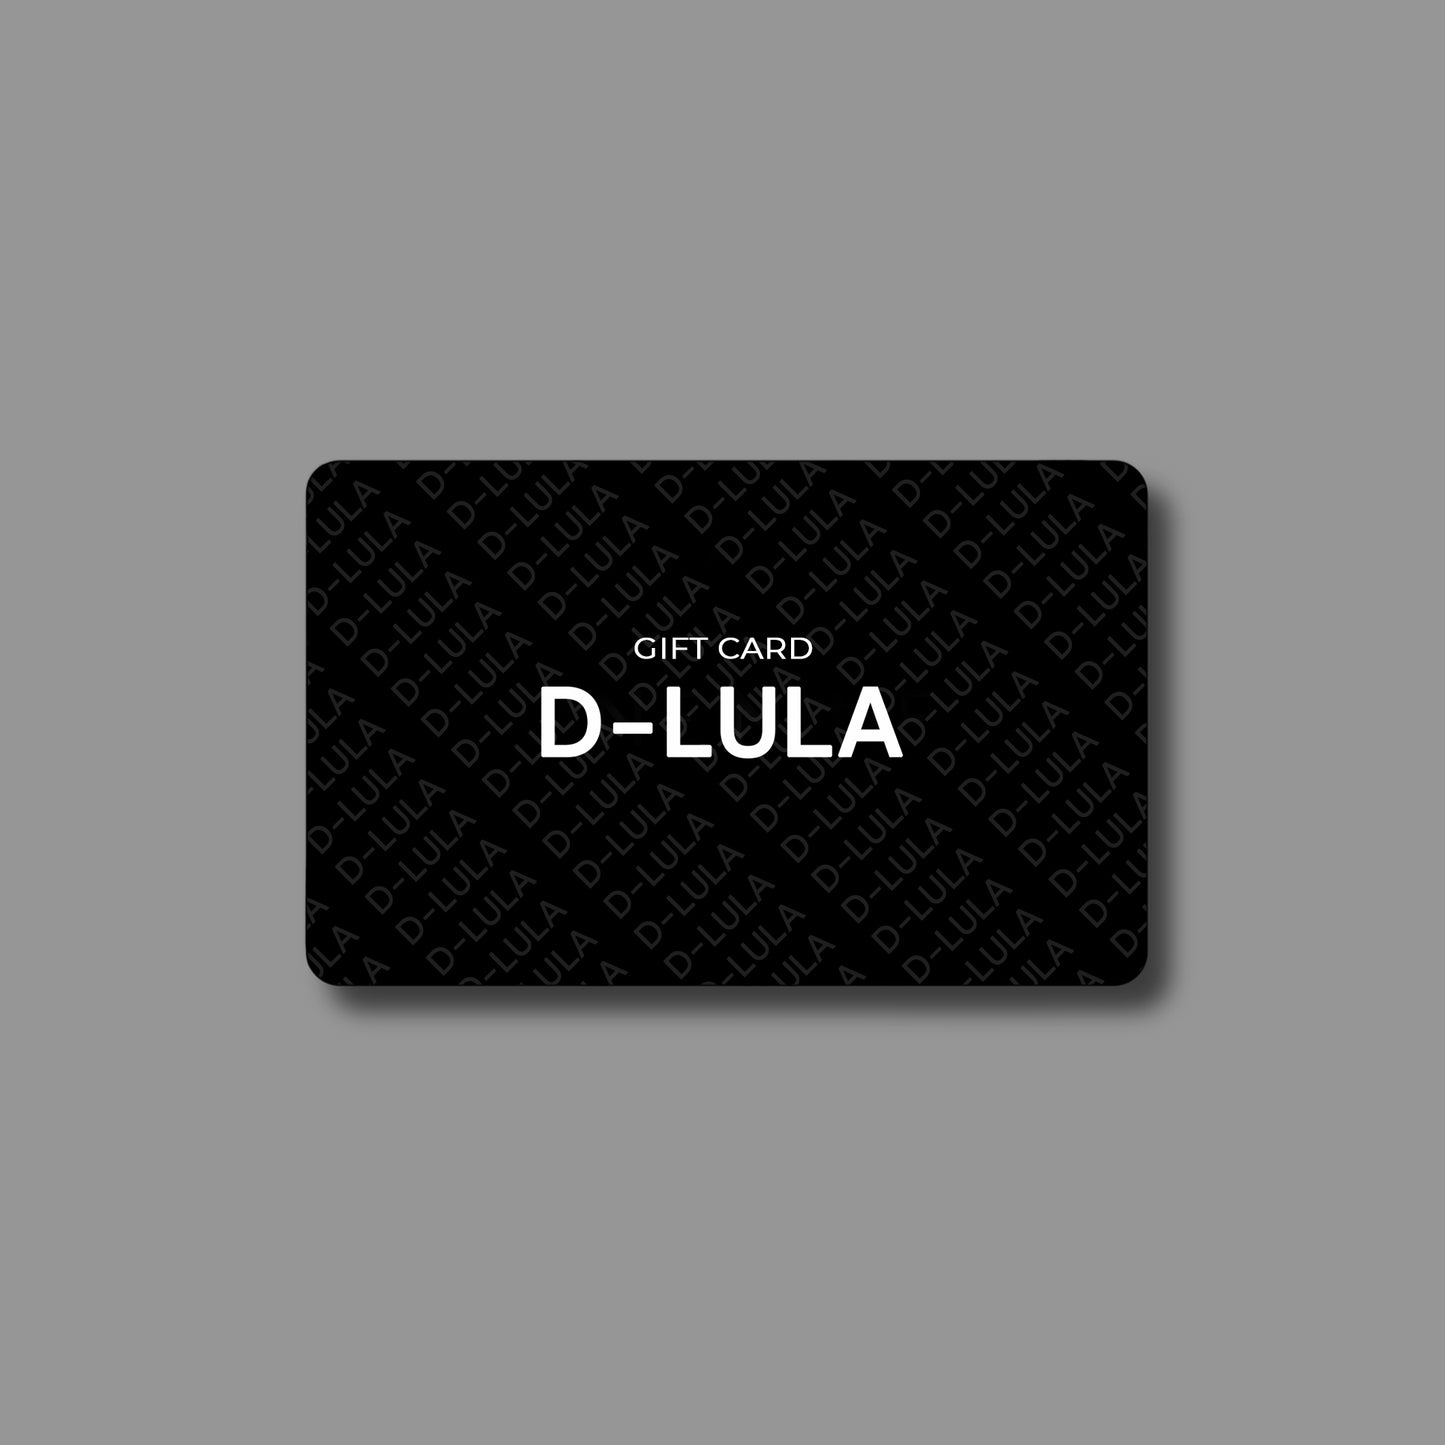 D-LULA GIFT CARD